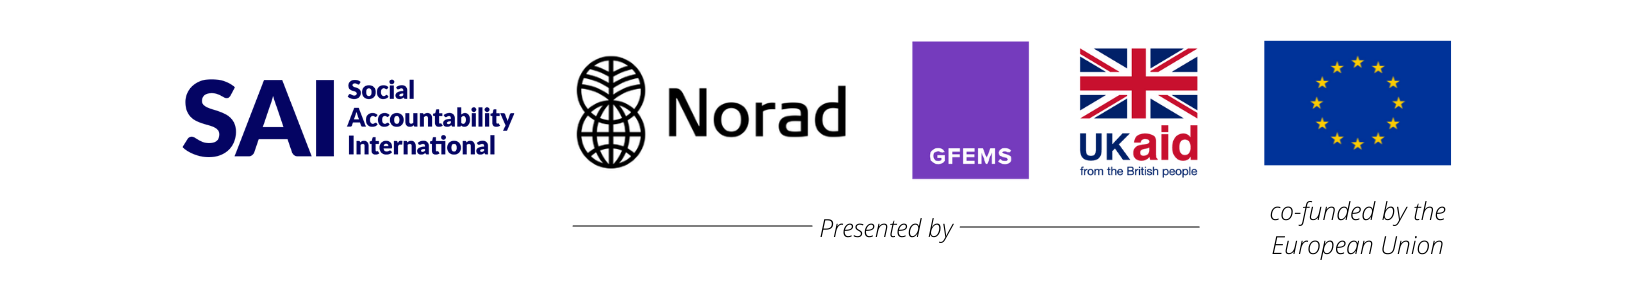 series of logos: Social Accountability International, Norad, GFEMS, Ukaid, and European Union